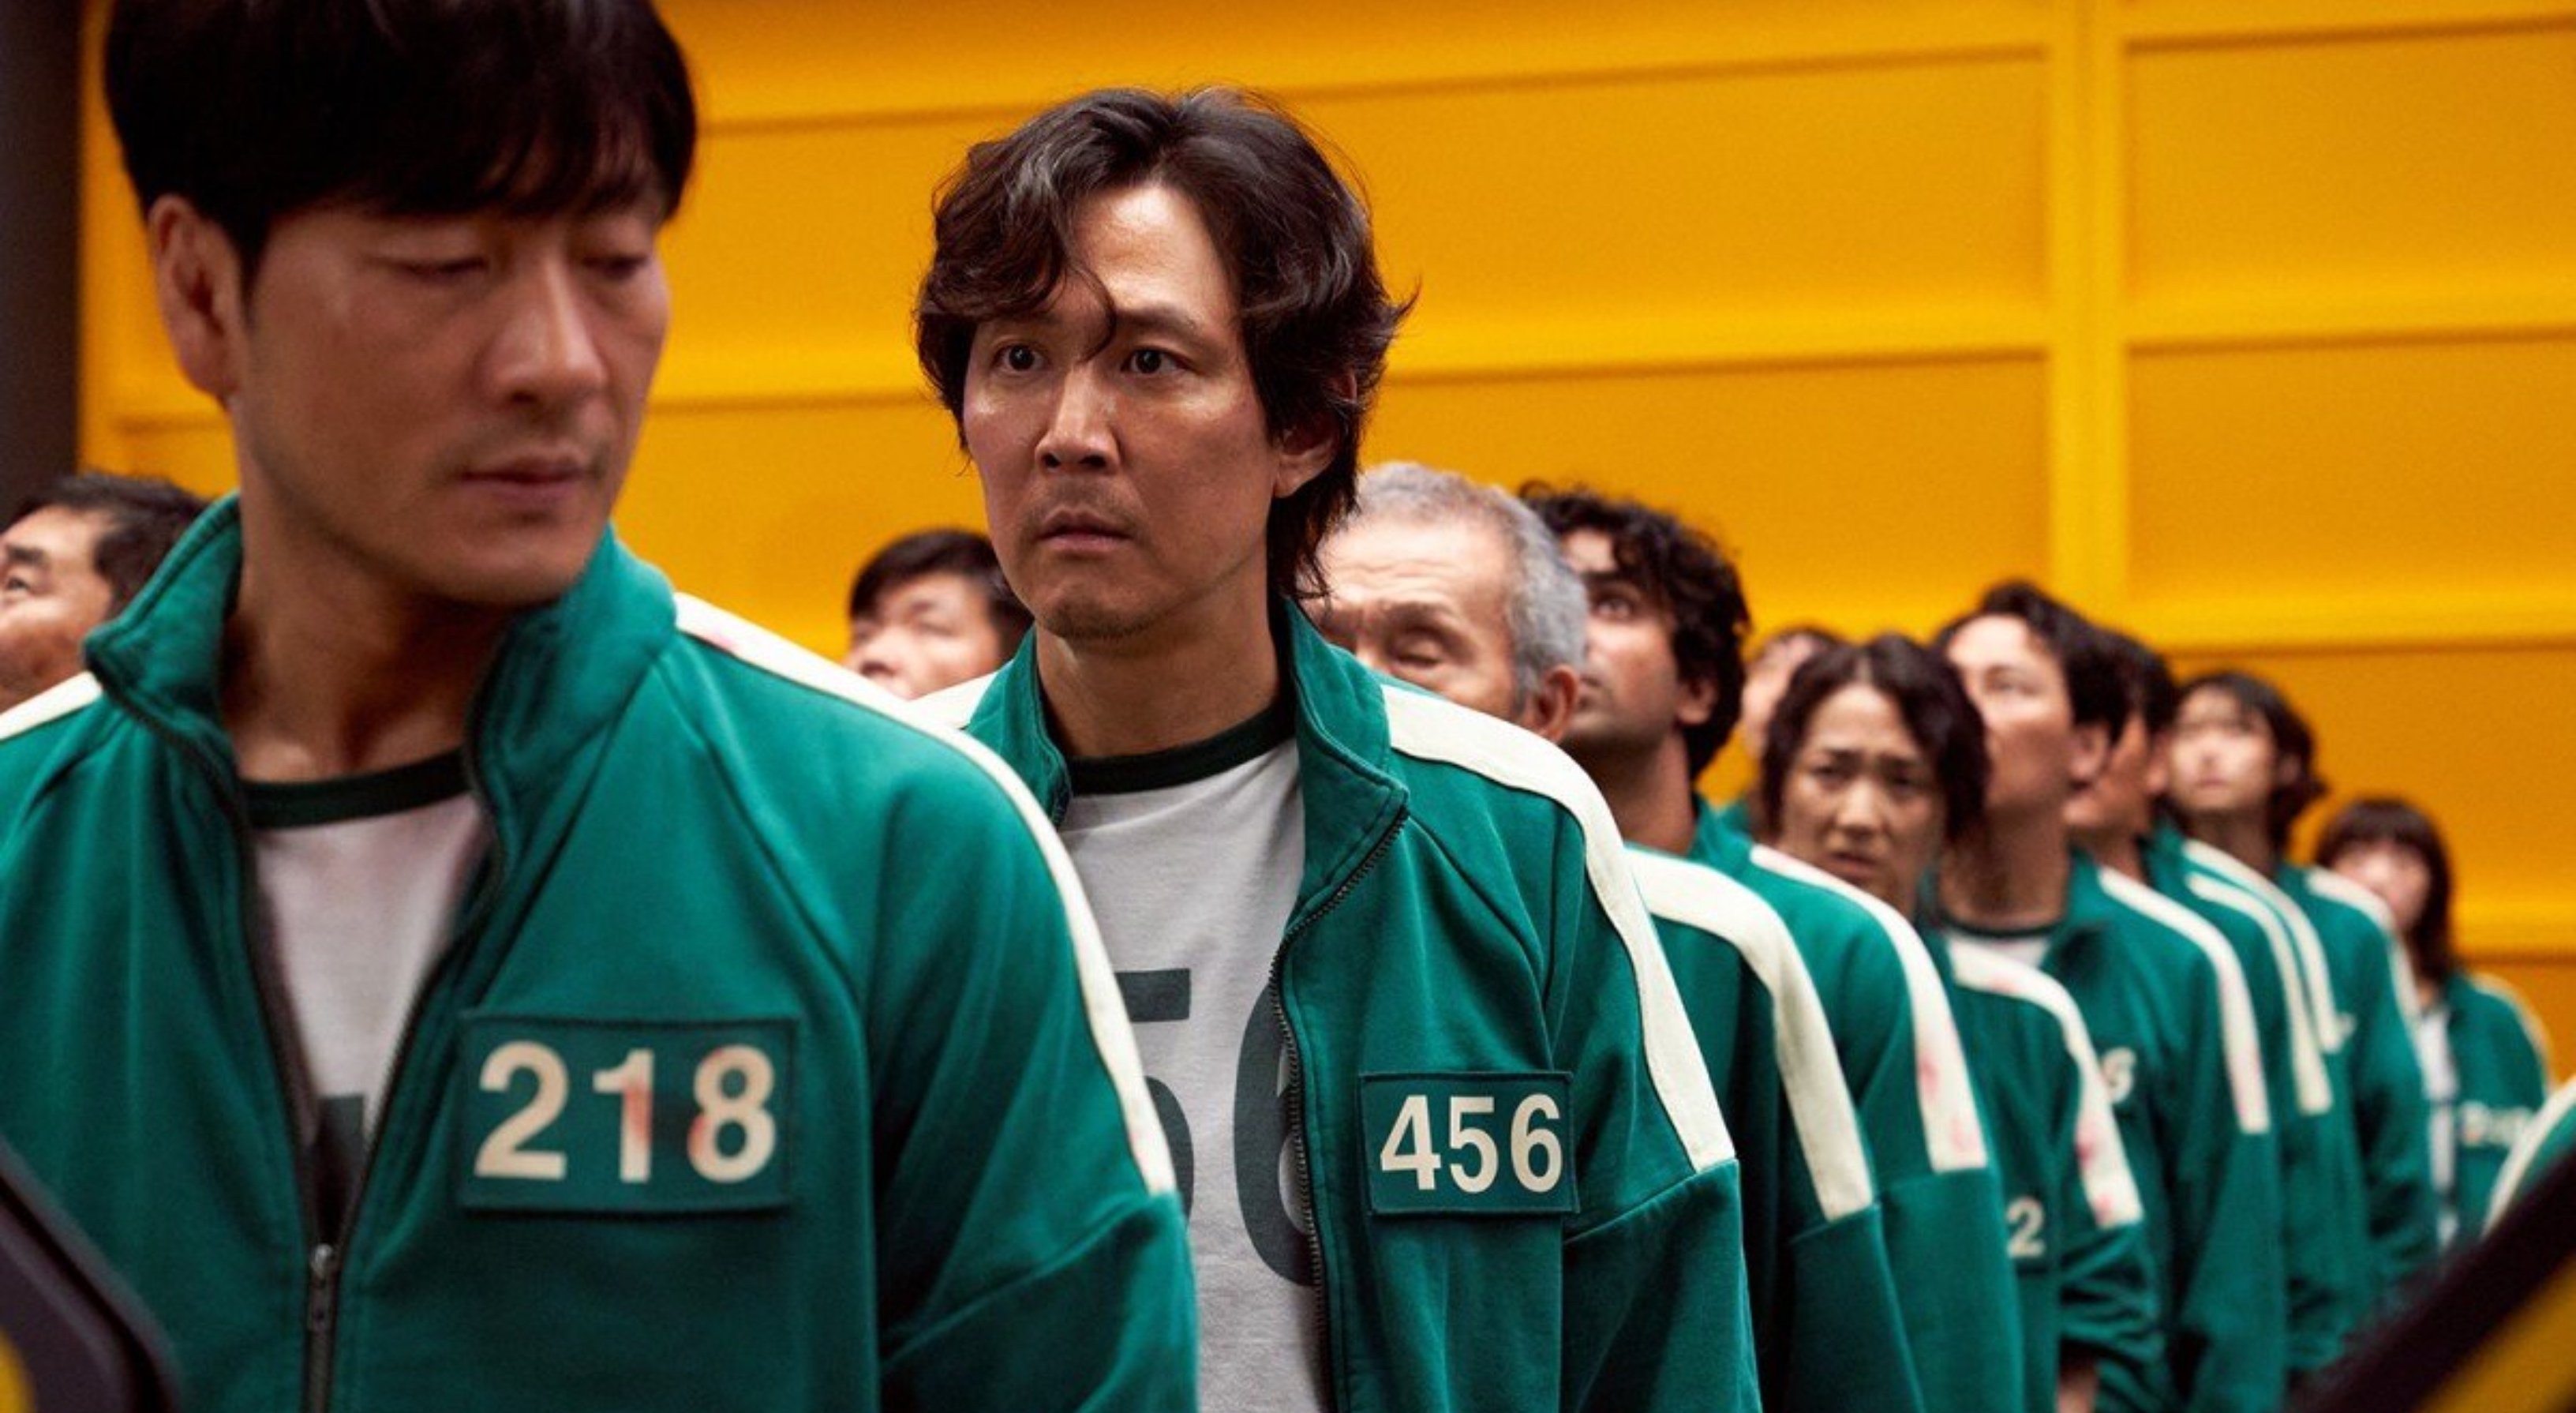 Lee Jung-Jae in Netflix's 'Squid Game' wearing green tracksuit